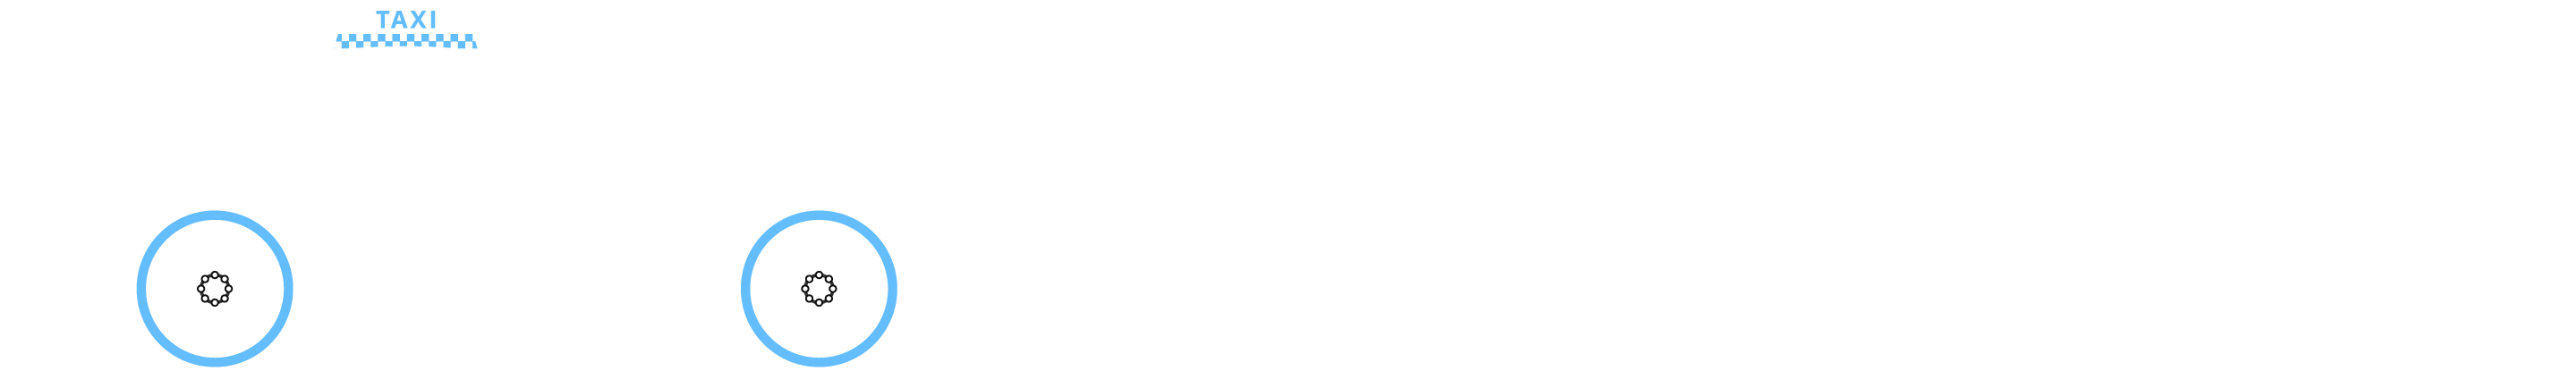 madhav-travel-logo